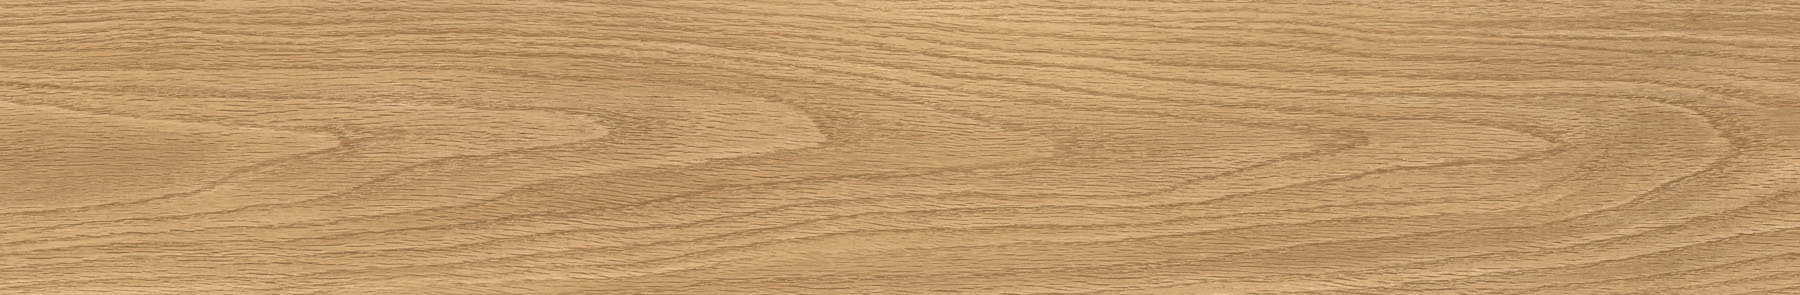 EW1484-15 川島織物セルコン 床タイル エグザウッド ブレッザオーク 川島織物セルコン フロアタイル